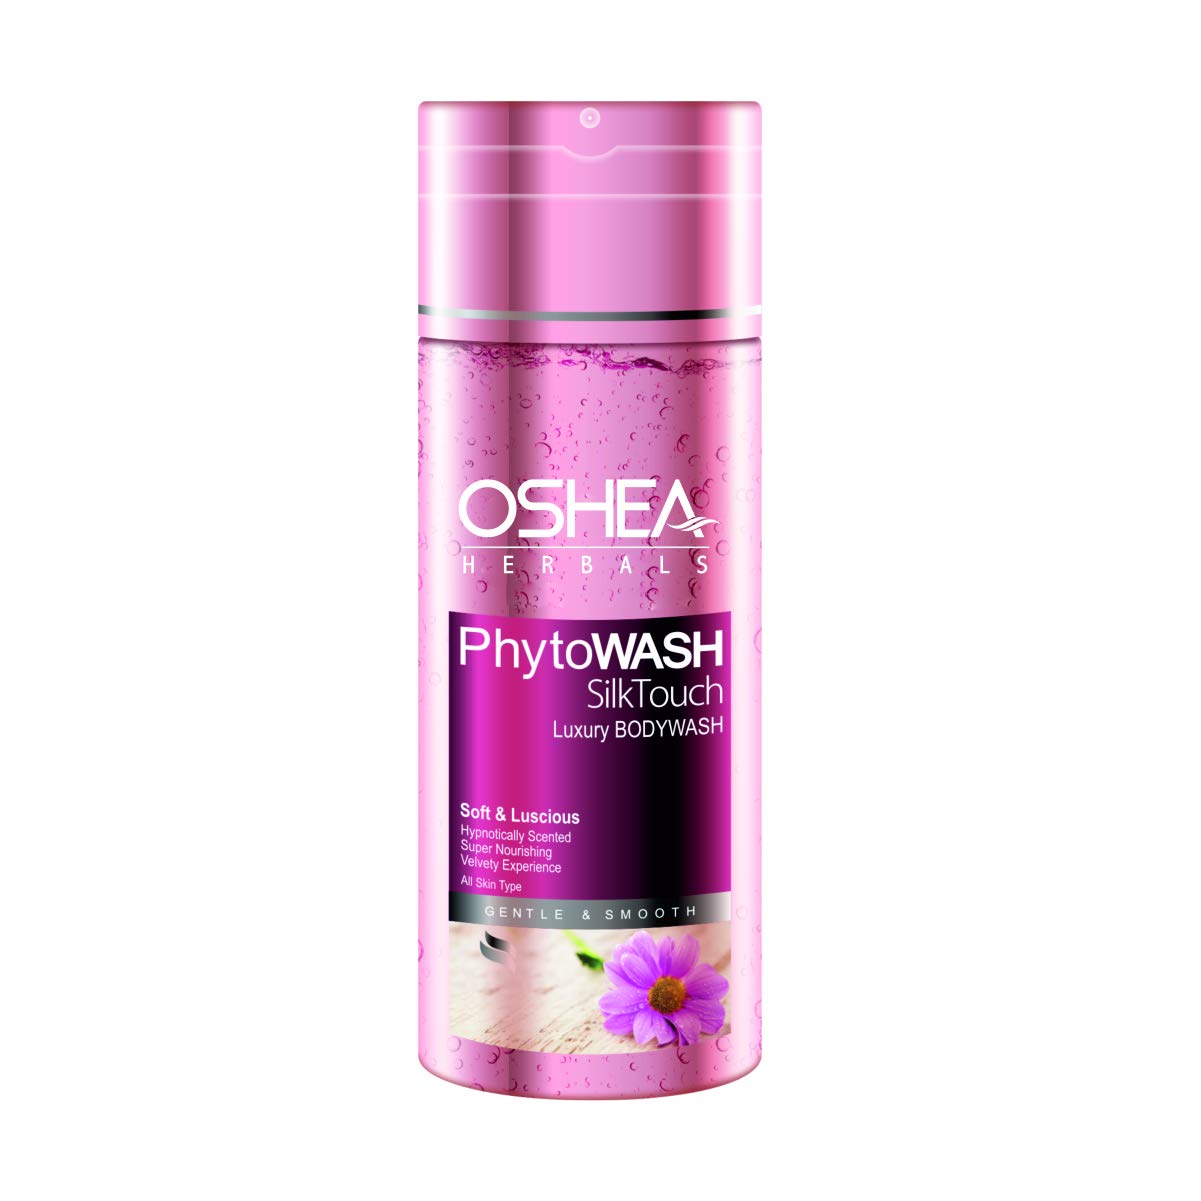 Oshea Phytowash Silk Touch Luxury Bodywash, Pink, 200 ml